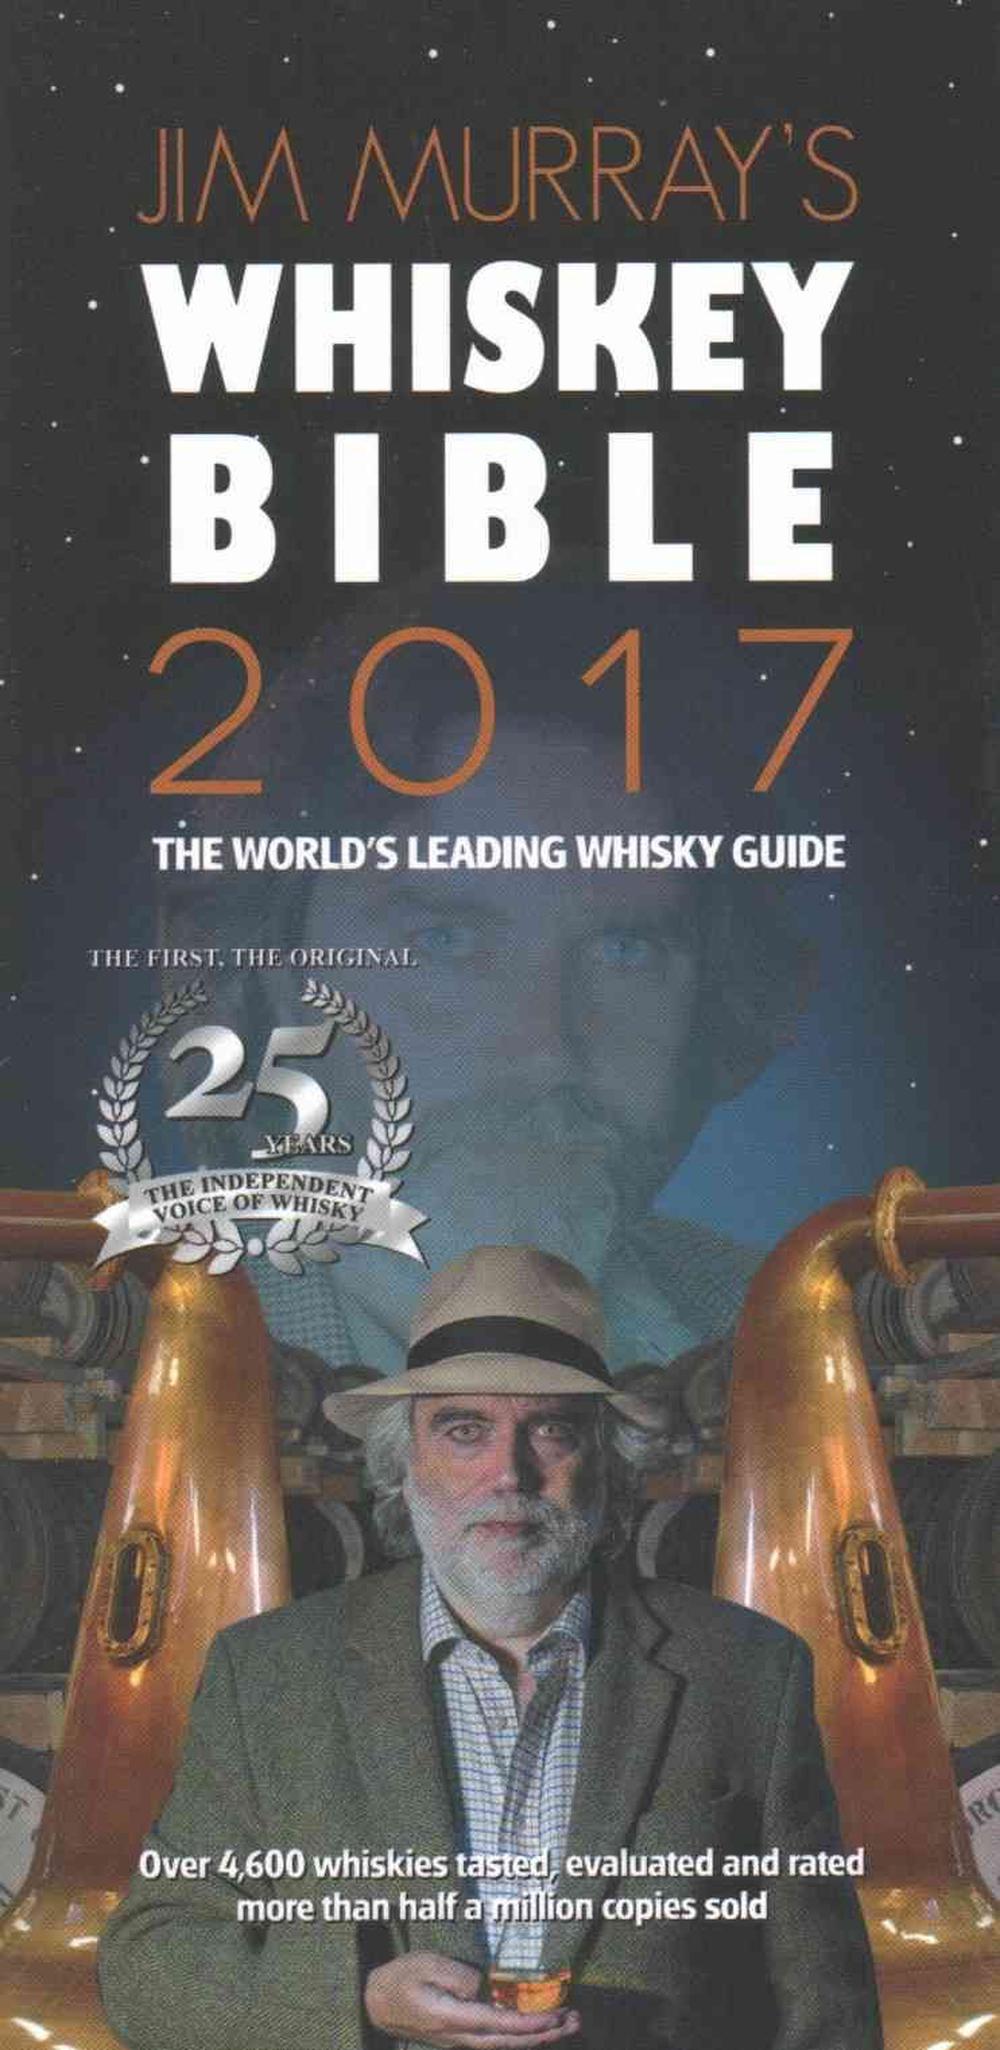 Jim Murray's Whisky Bible by Jim Murray, Paperback, 9780993298615 Buy